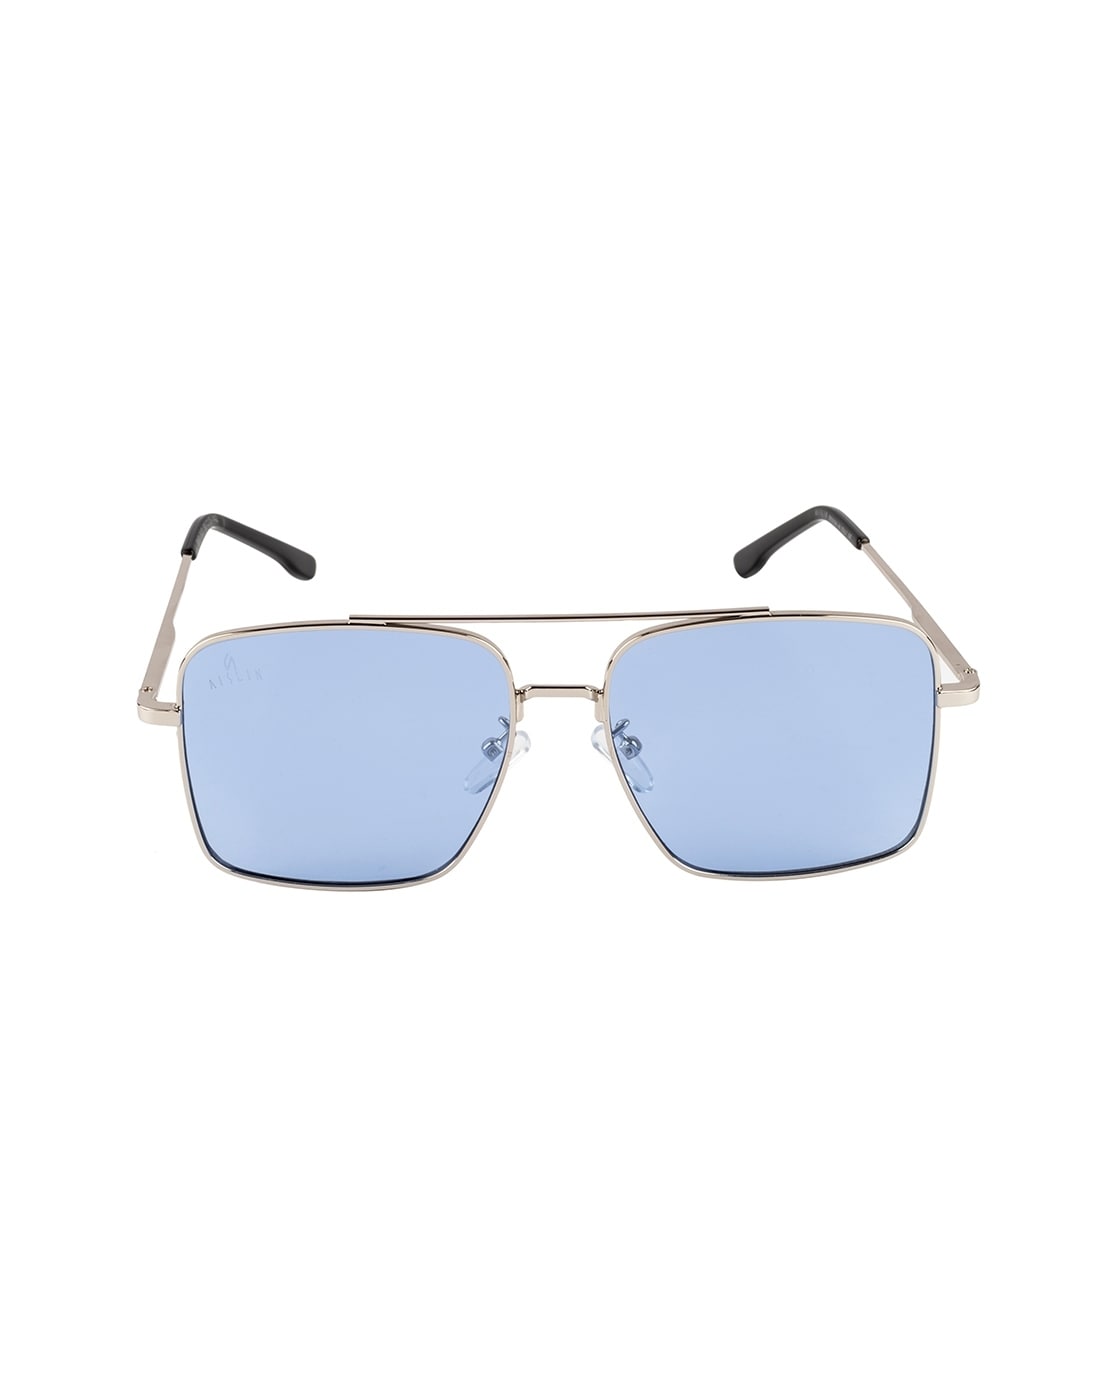 Prada Linea Rossa Sunglasses PS 55WS DG002S - Best Price and Available as  Prescription Sunglasses